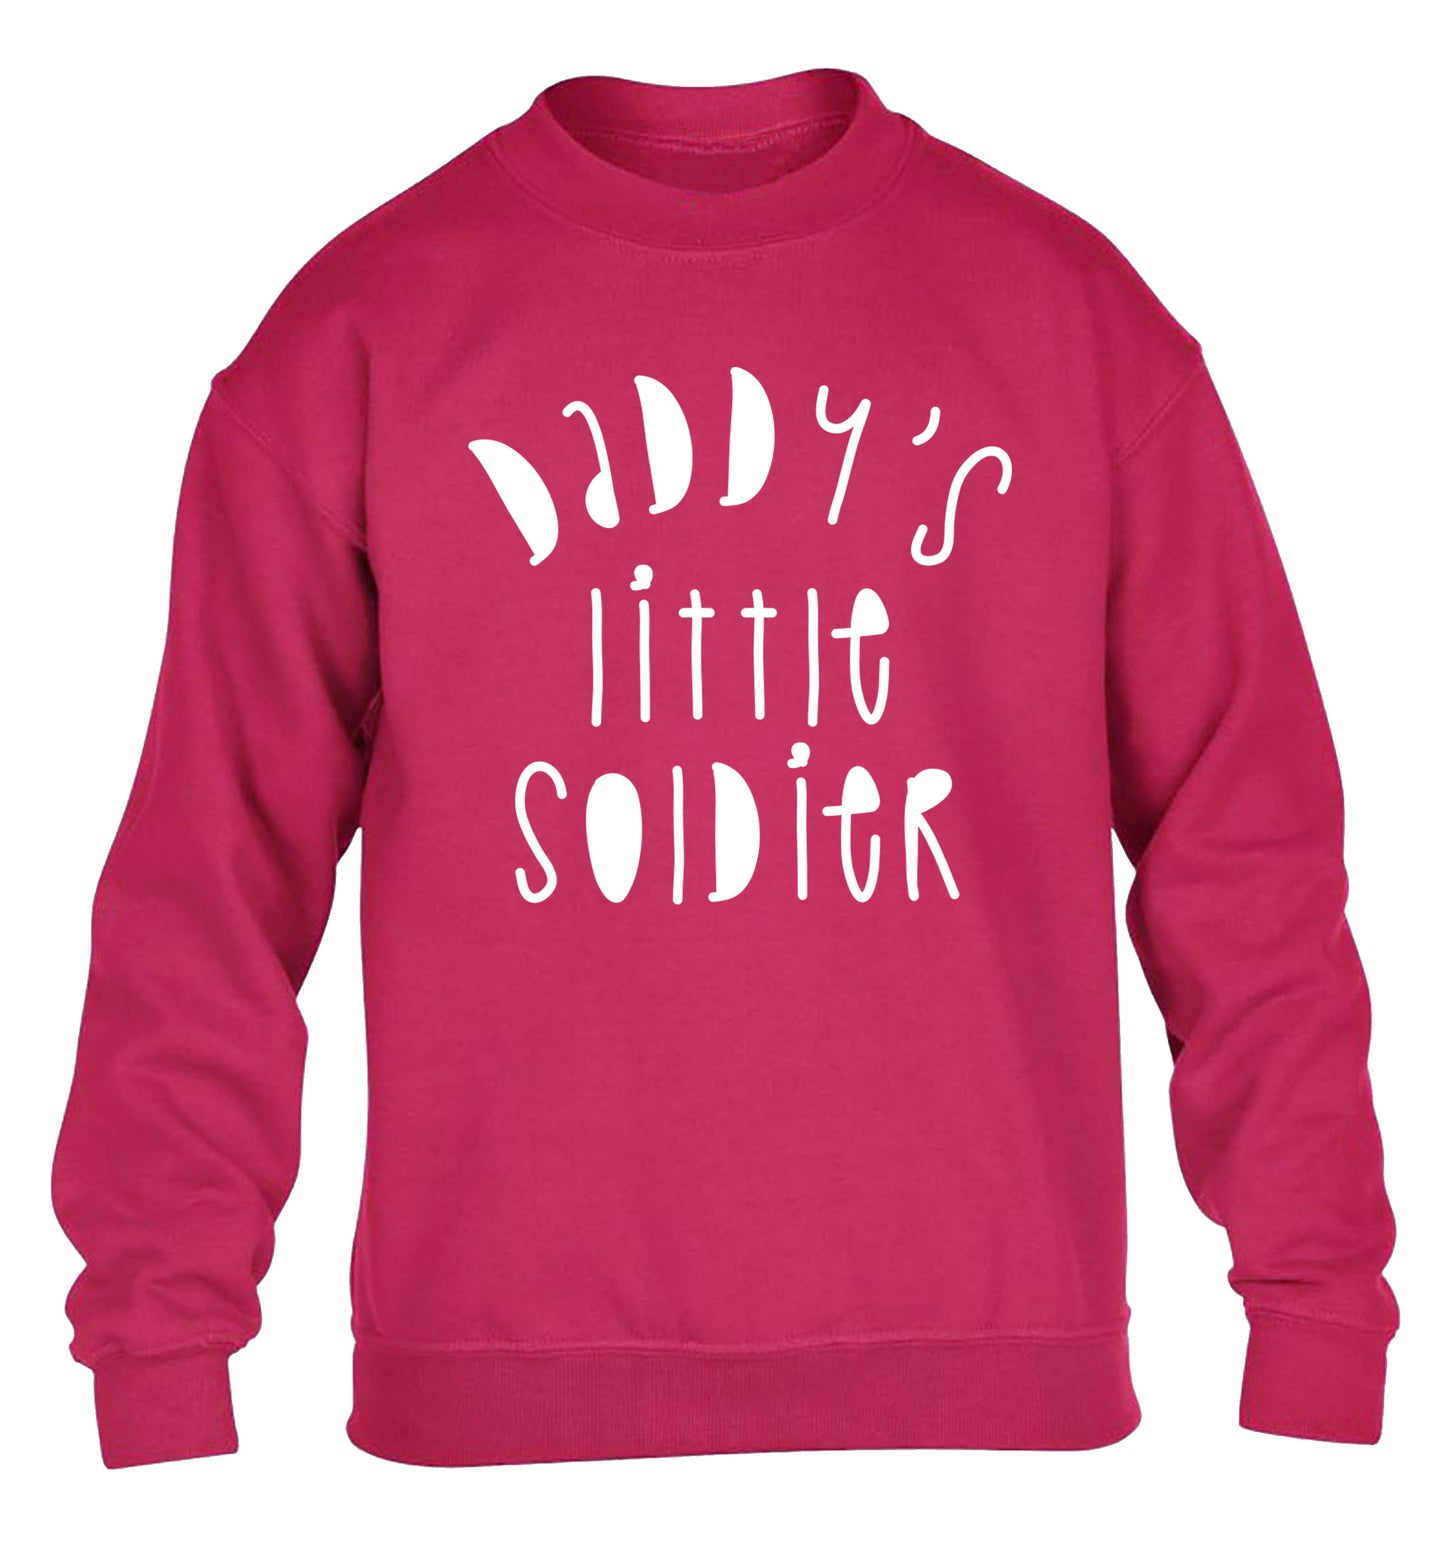 Daddy's little soldier children's pink sweater 12-14 Years